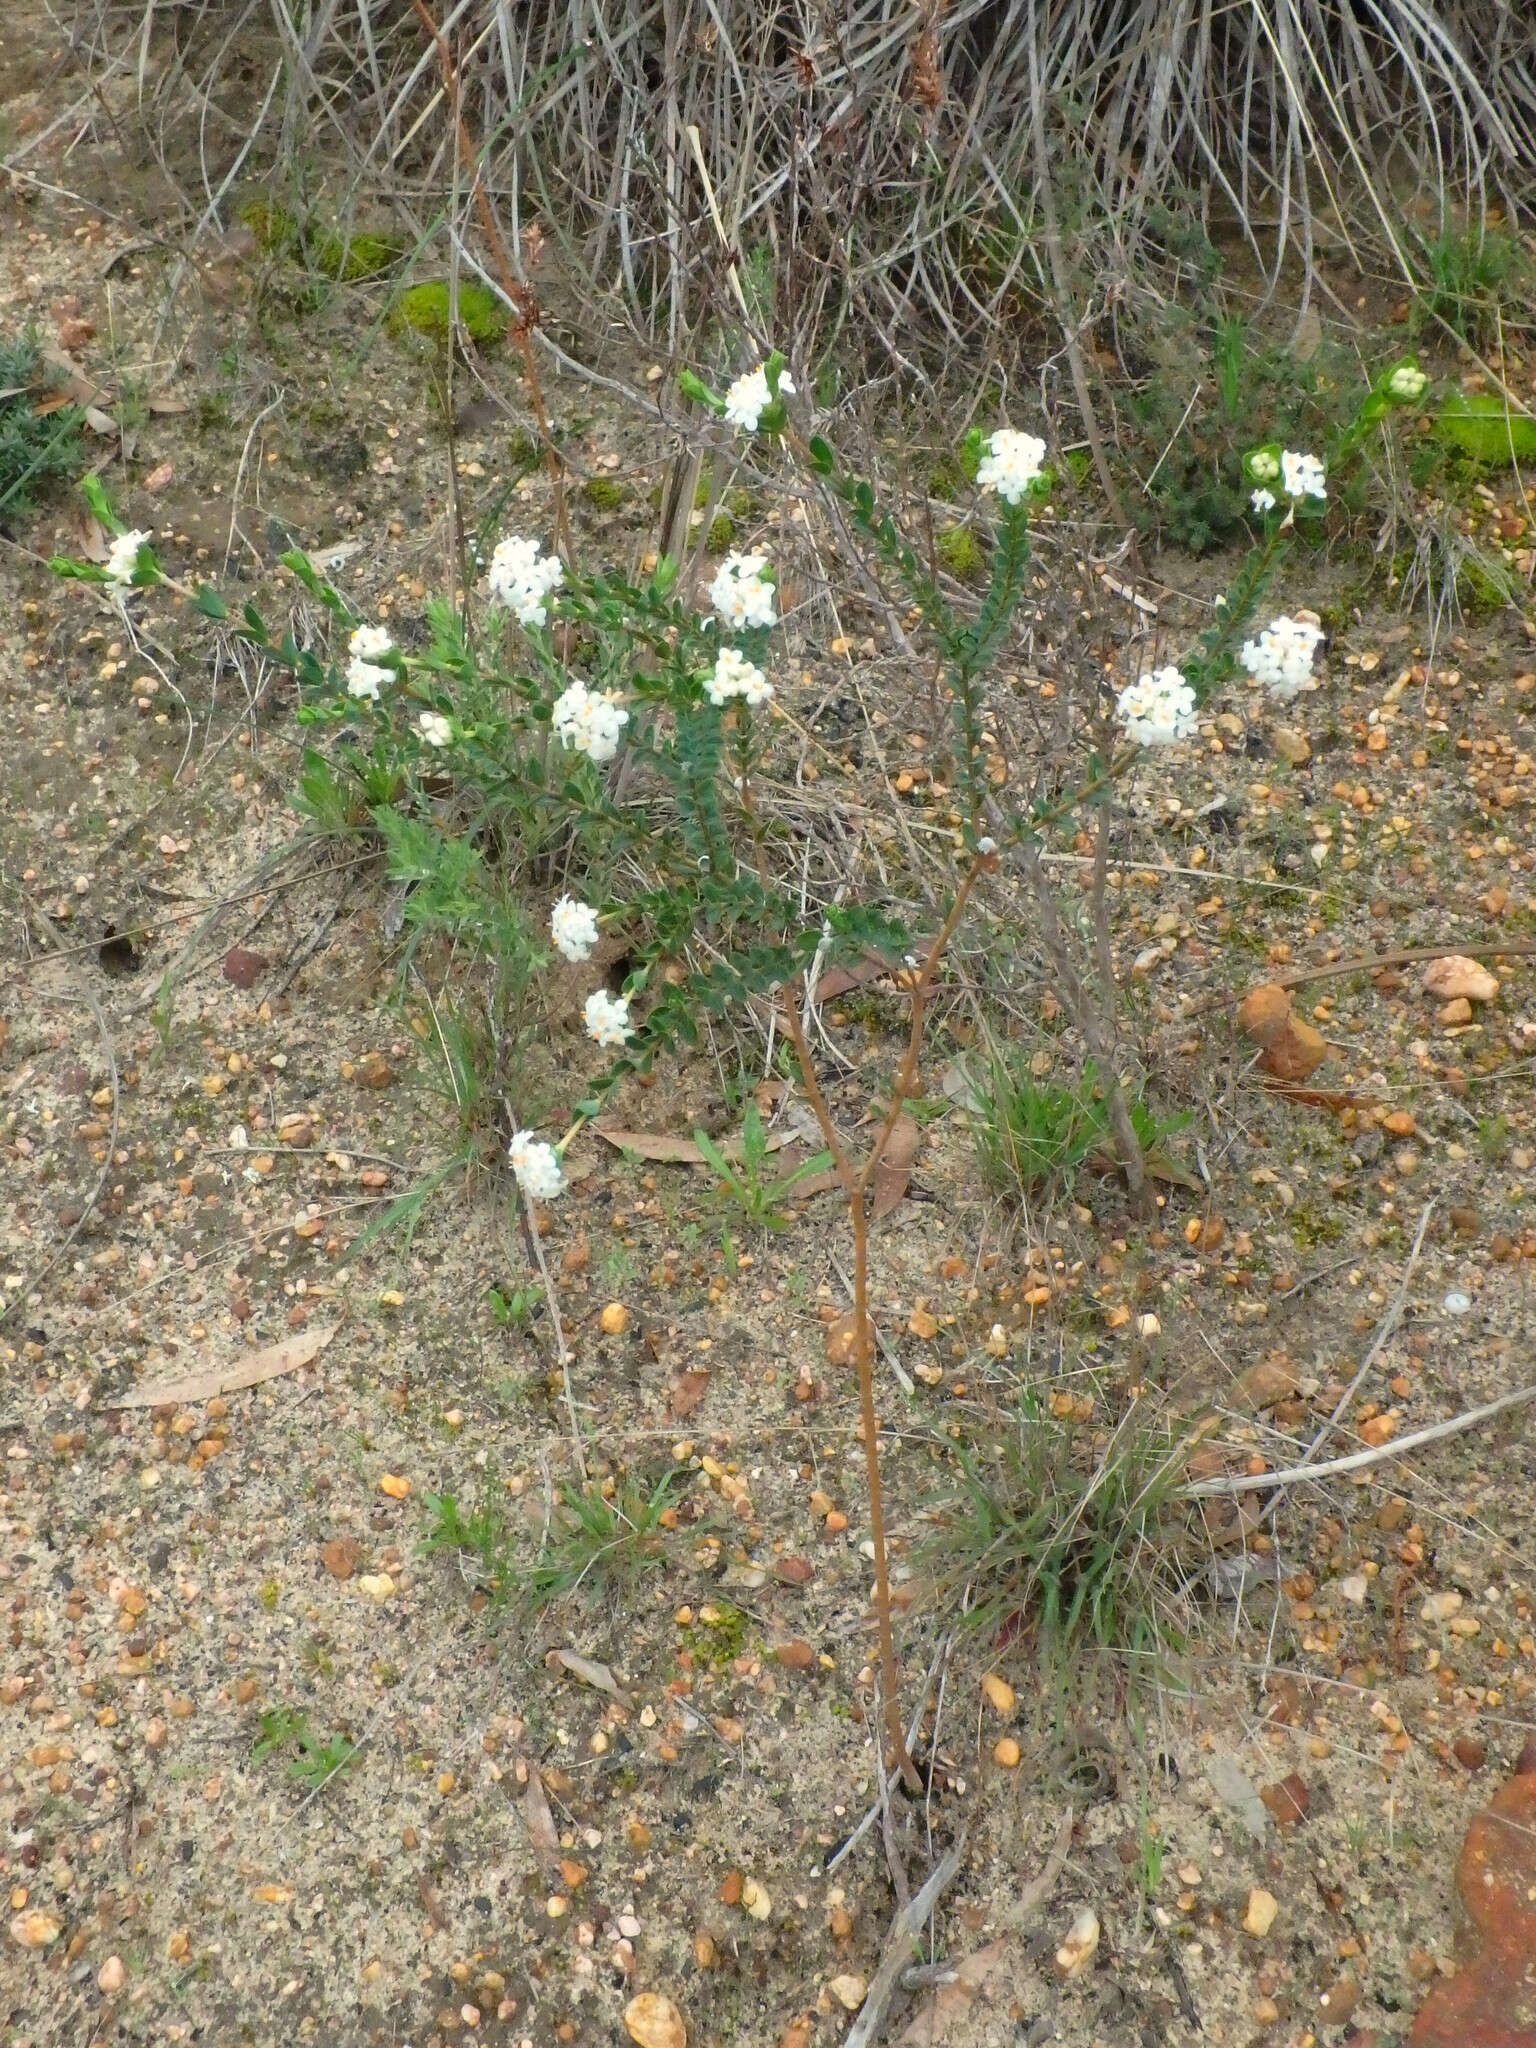 Image of Pimelea flava subsp. dichotoma (Schldl.) Threlfall